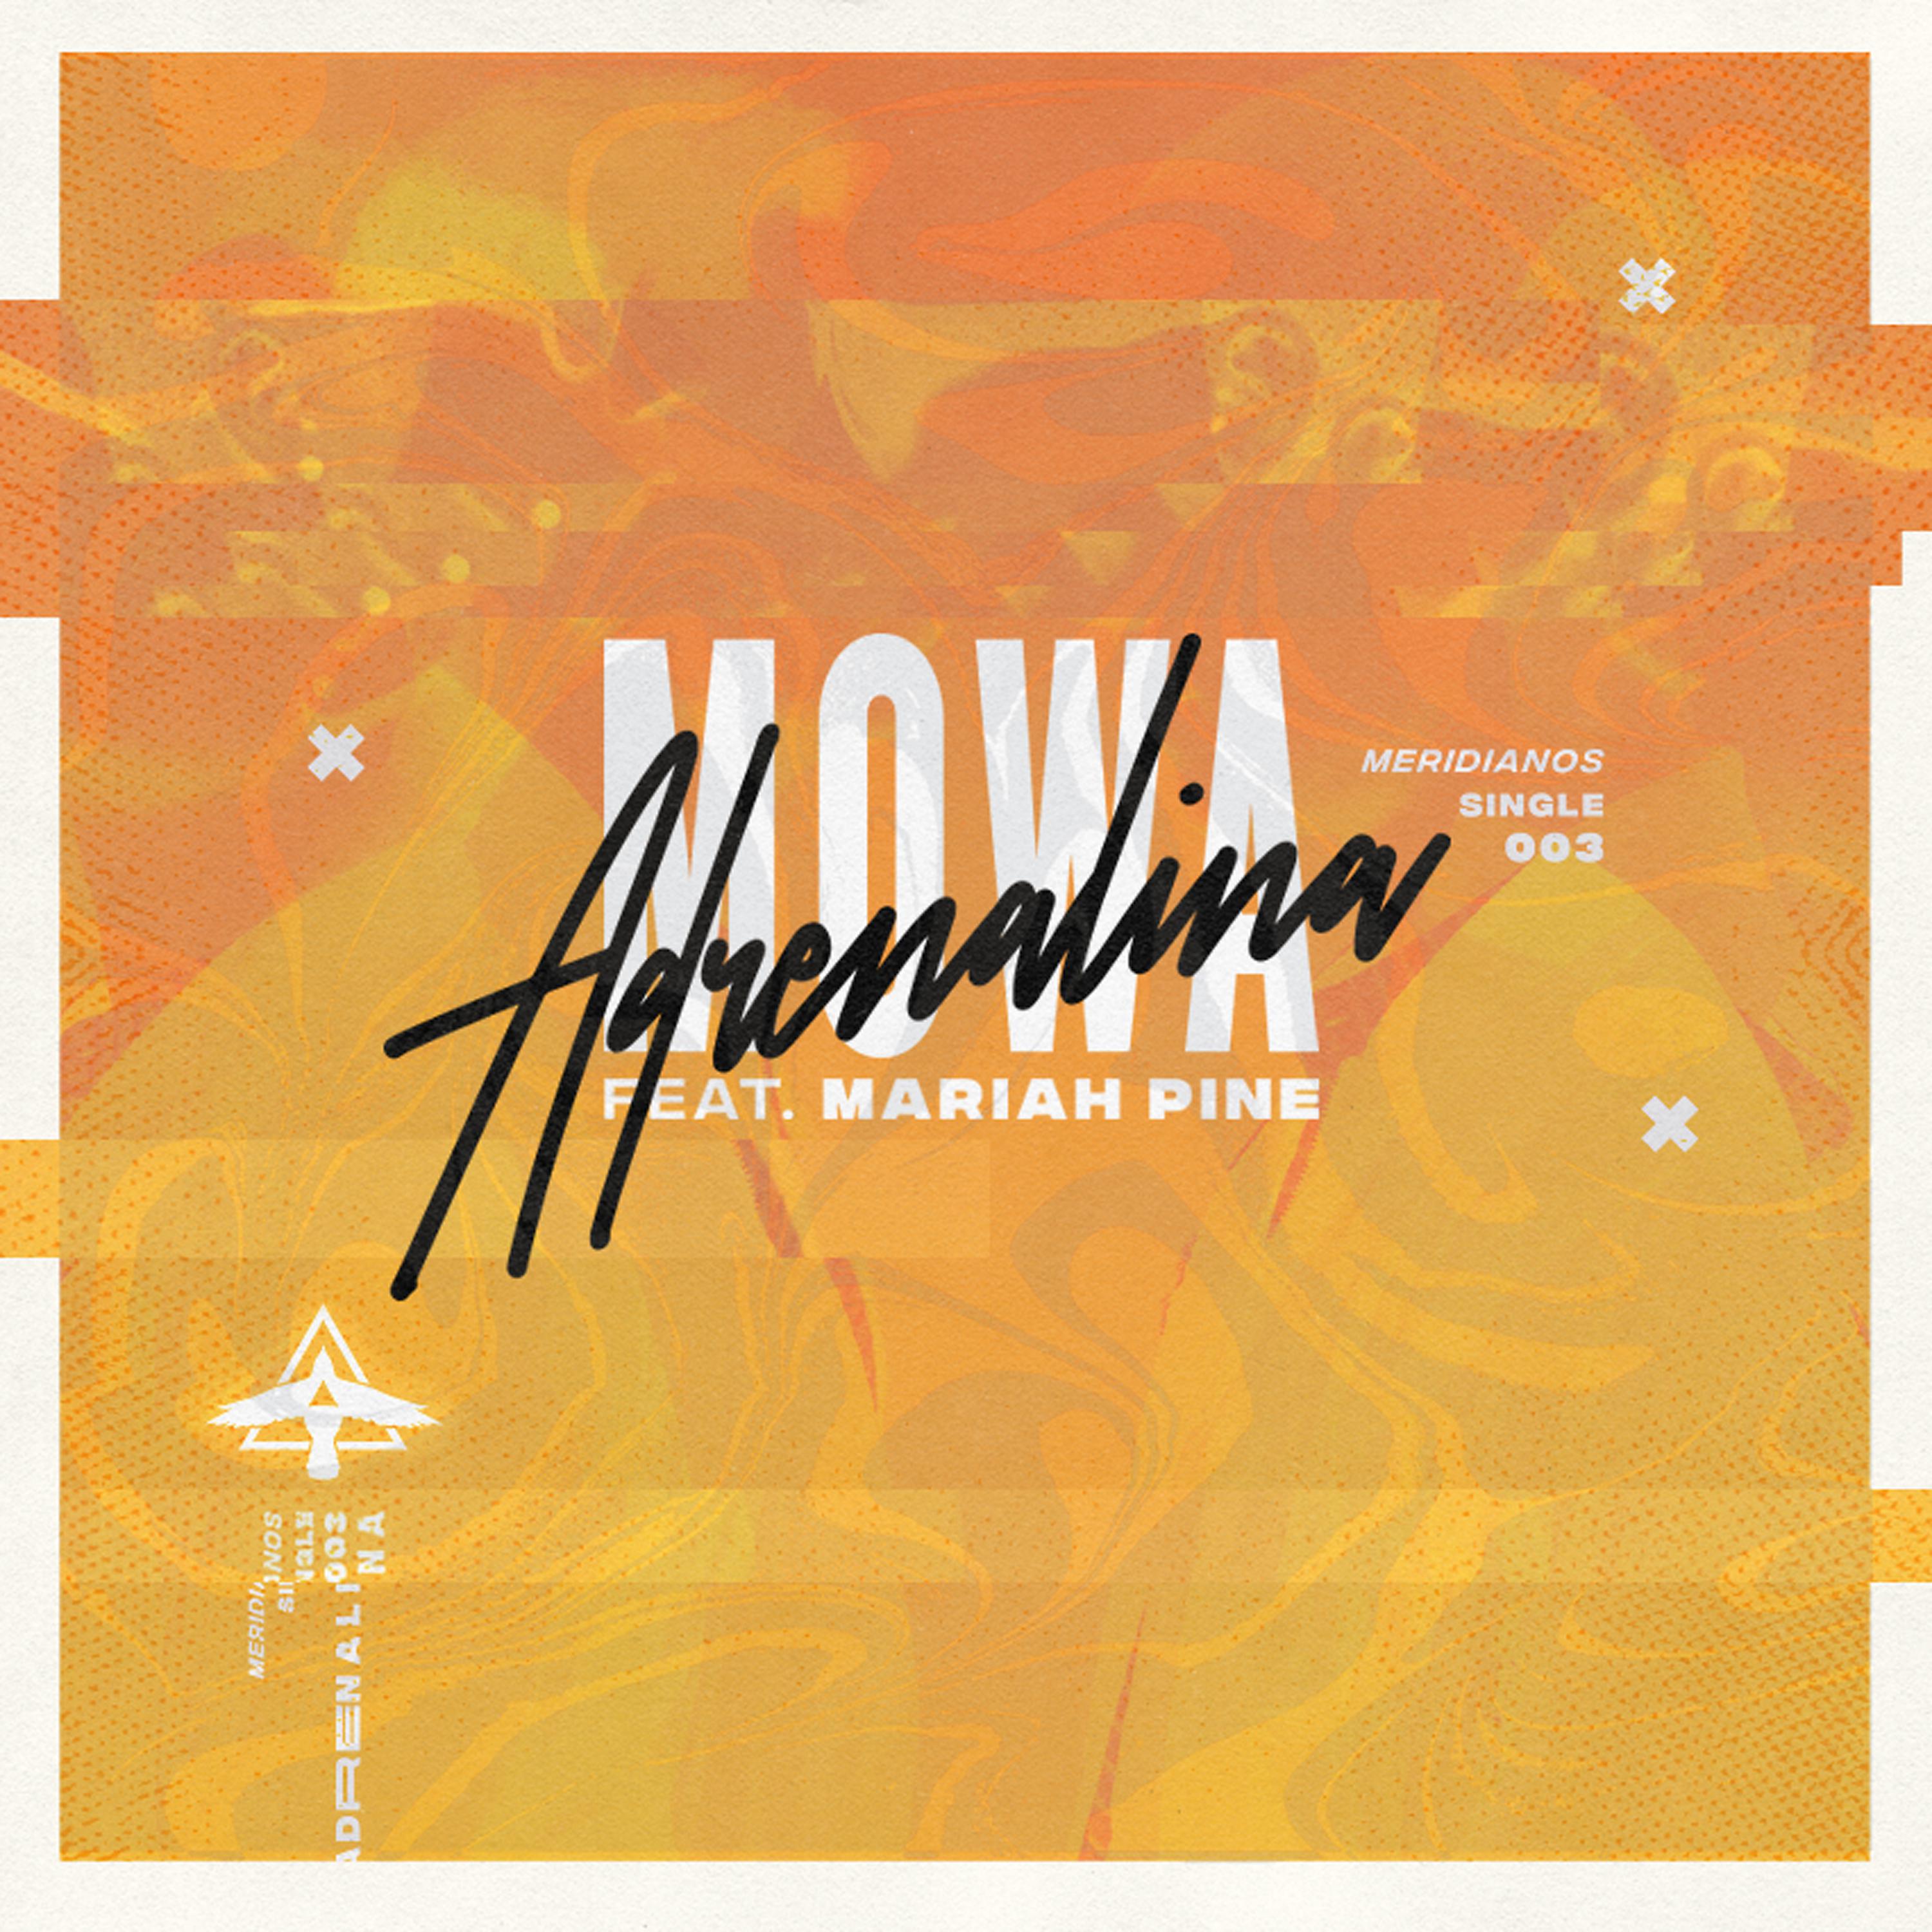 Постер альбома Adrenalina